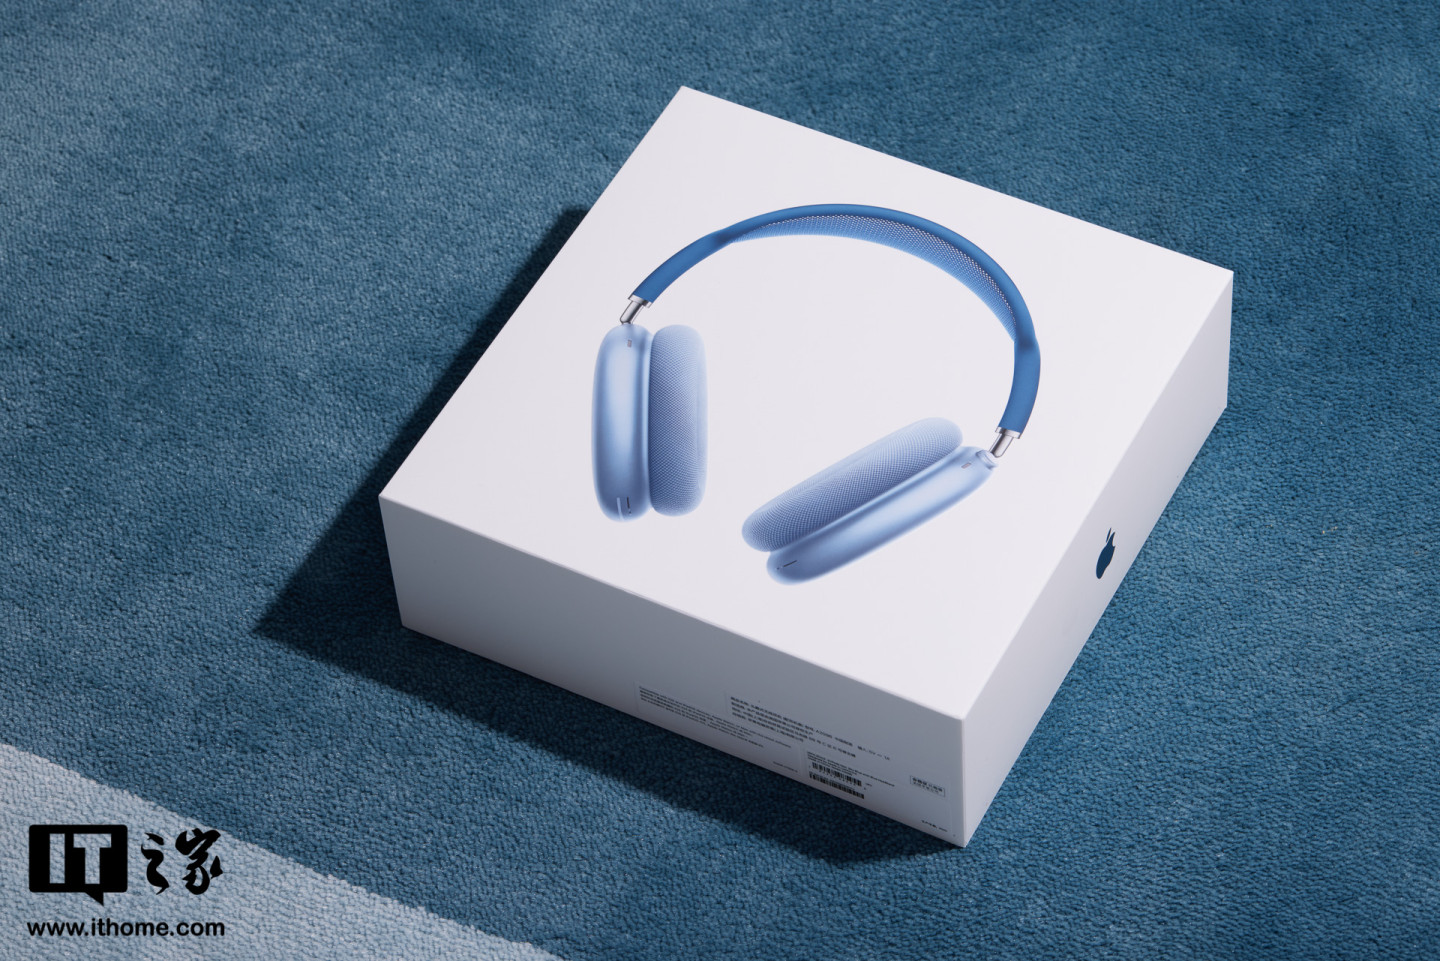 【it之家开箱】苹果 airpods max 无线耳机图赏:头戴式包耳设计,支持